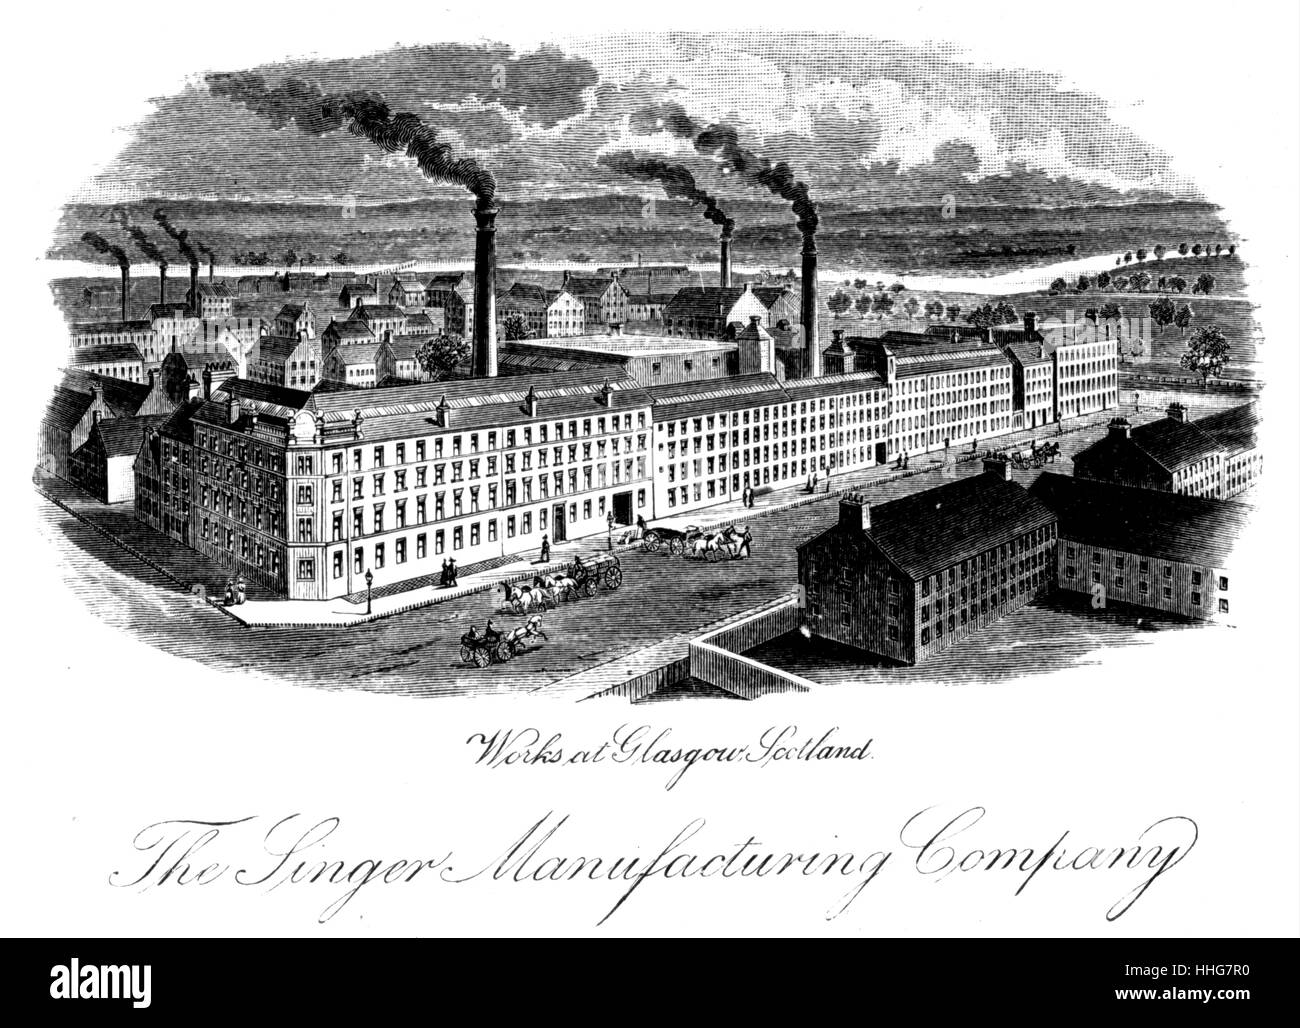 industrial revolution factory building